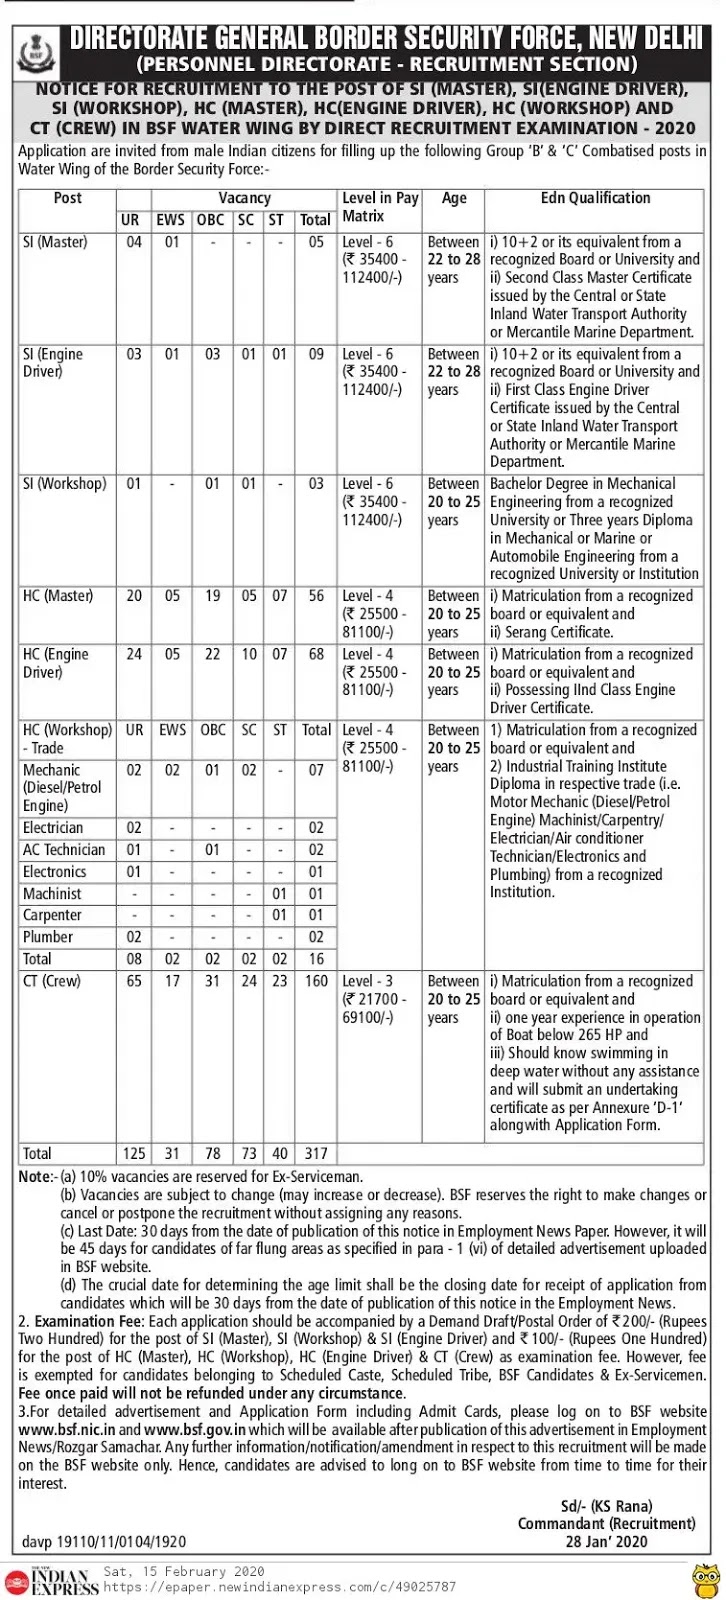 BSF Recruitment 2020 - Apply Offline 317 Constable Posts